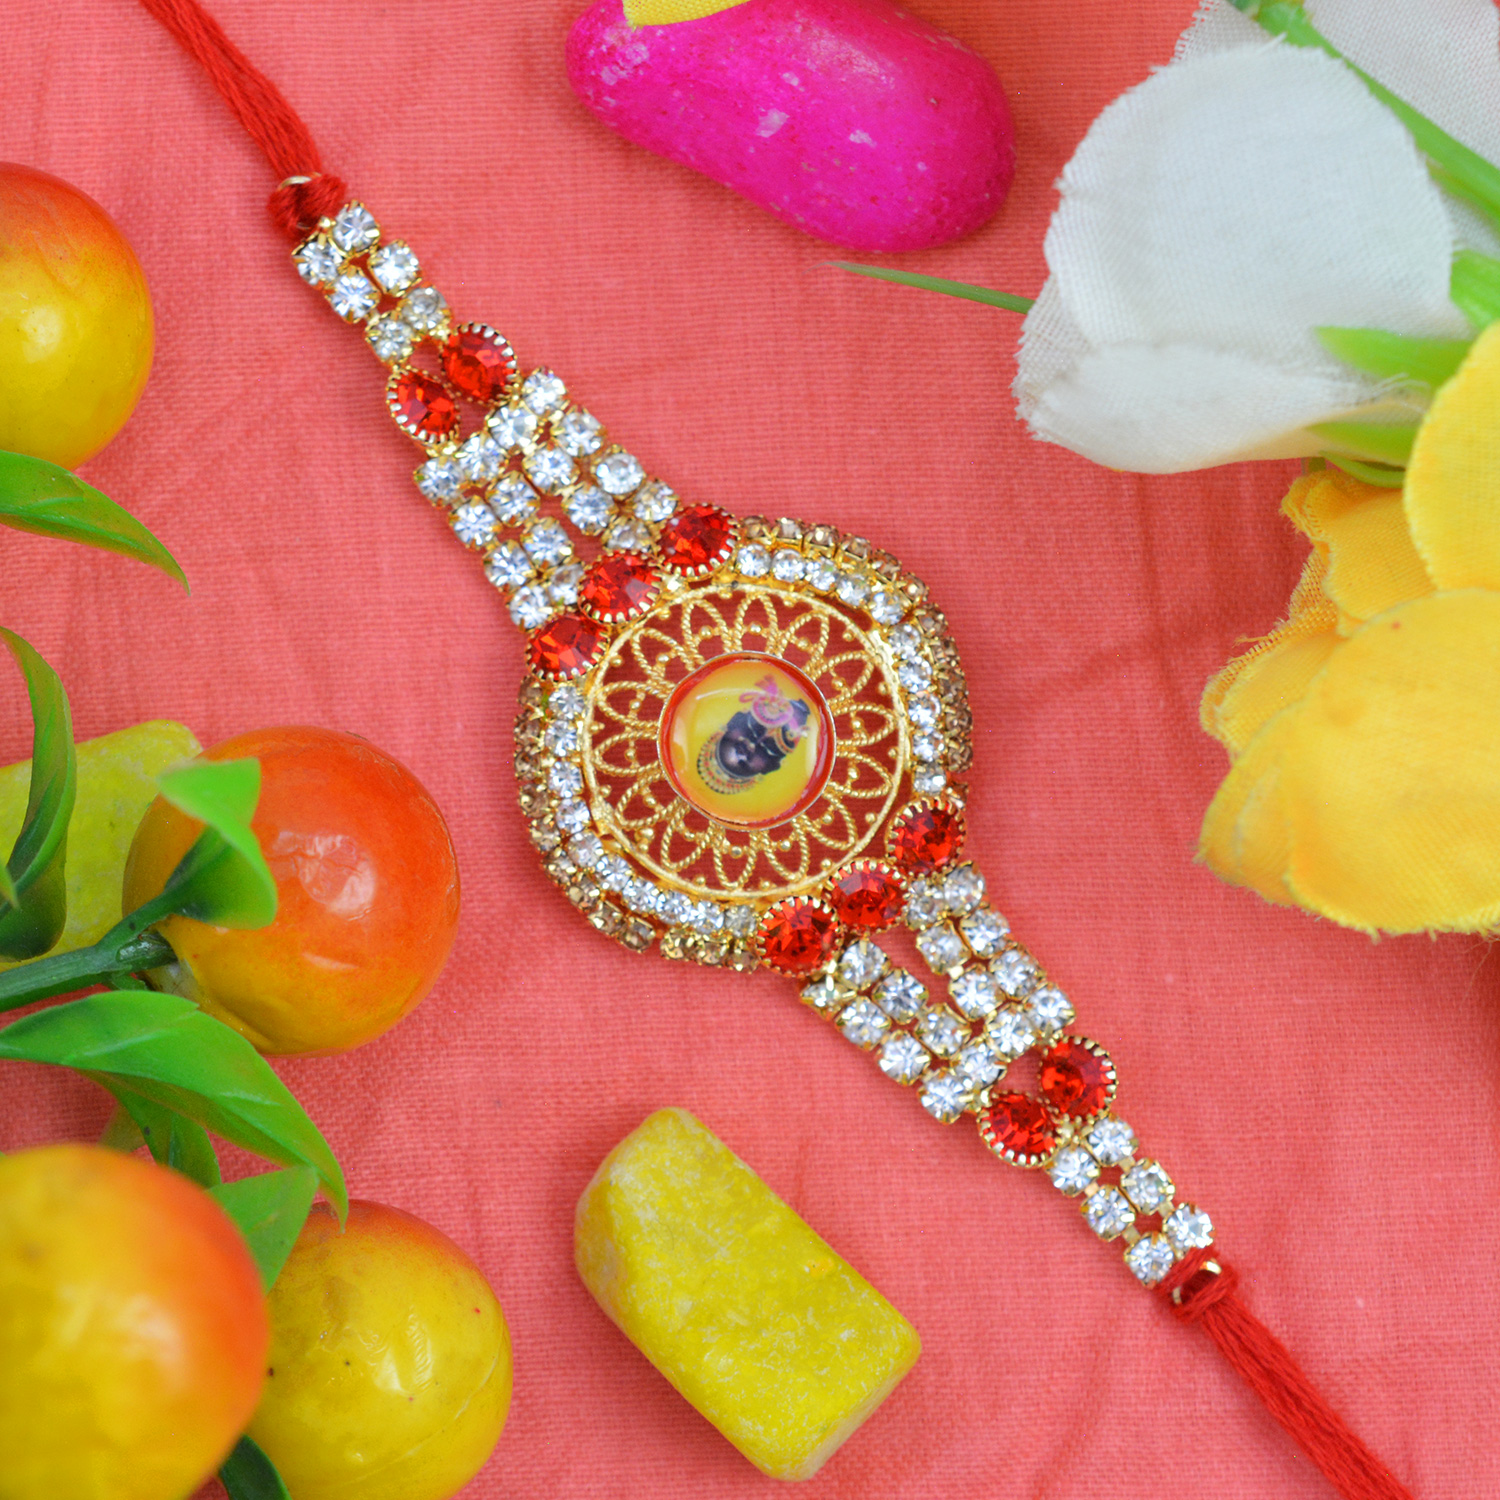 Amazing Flower Design Rakhi with Multicolor Attractive Diamonds